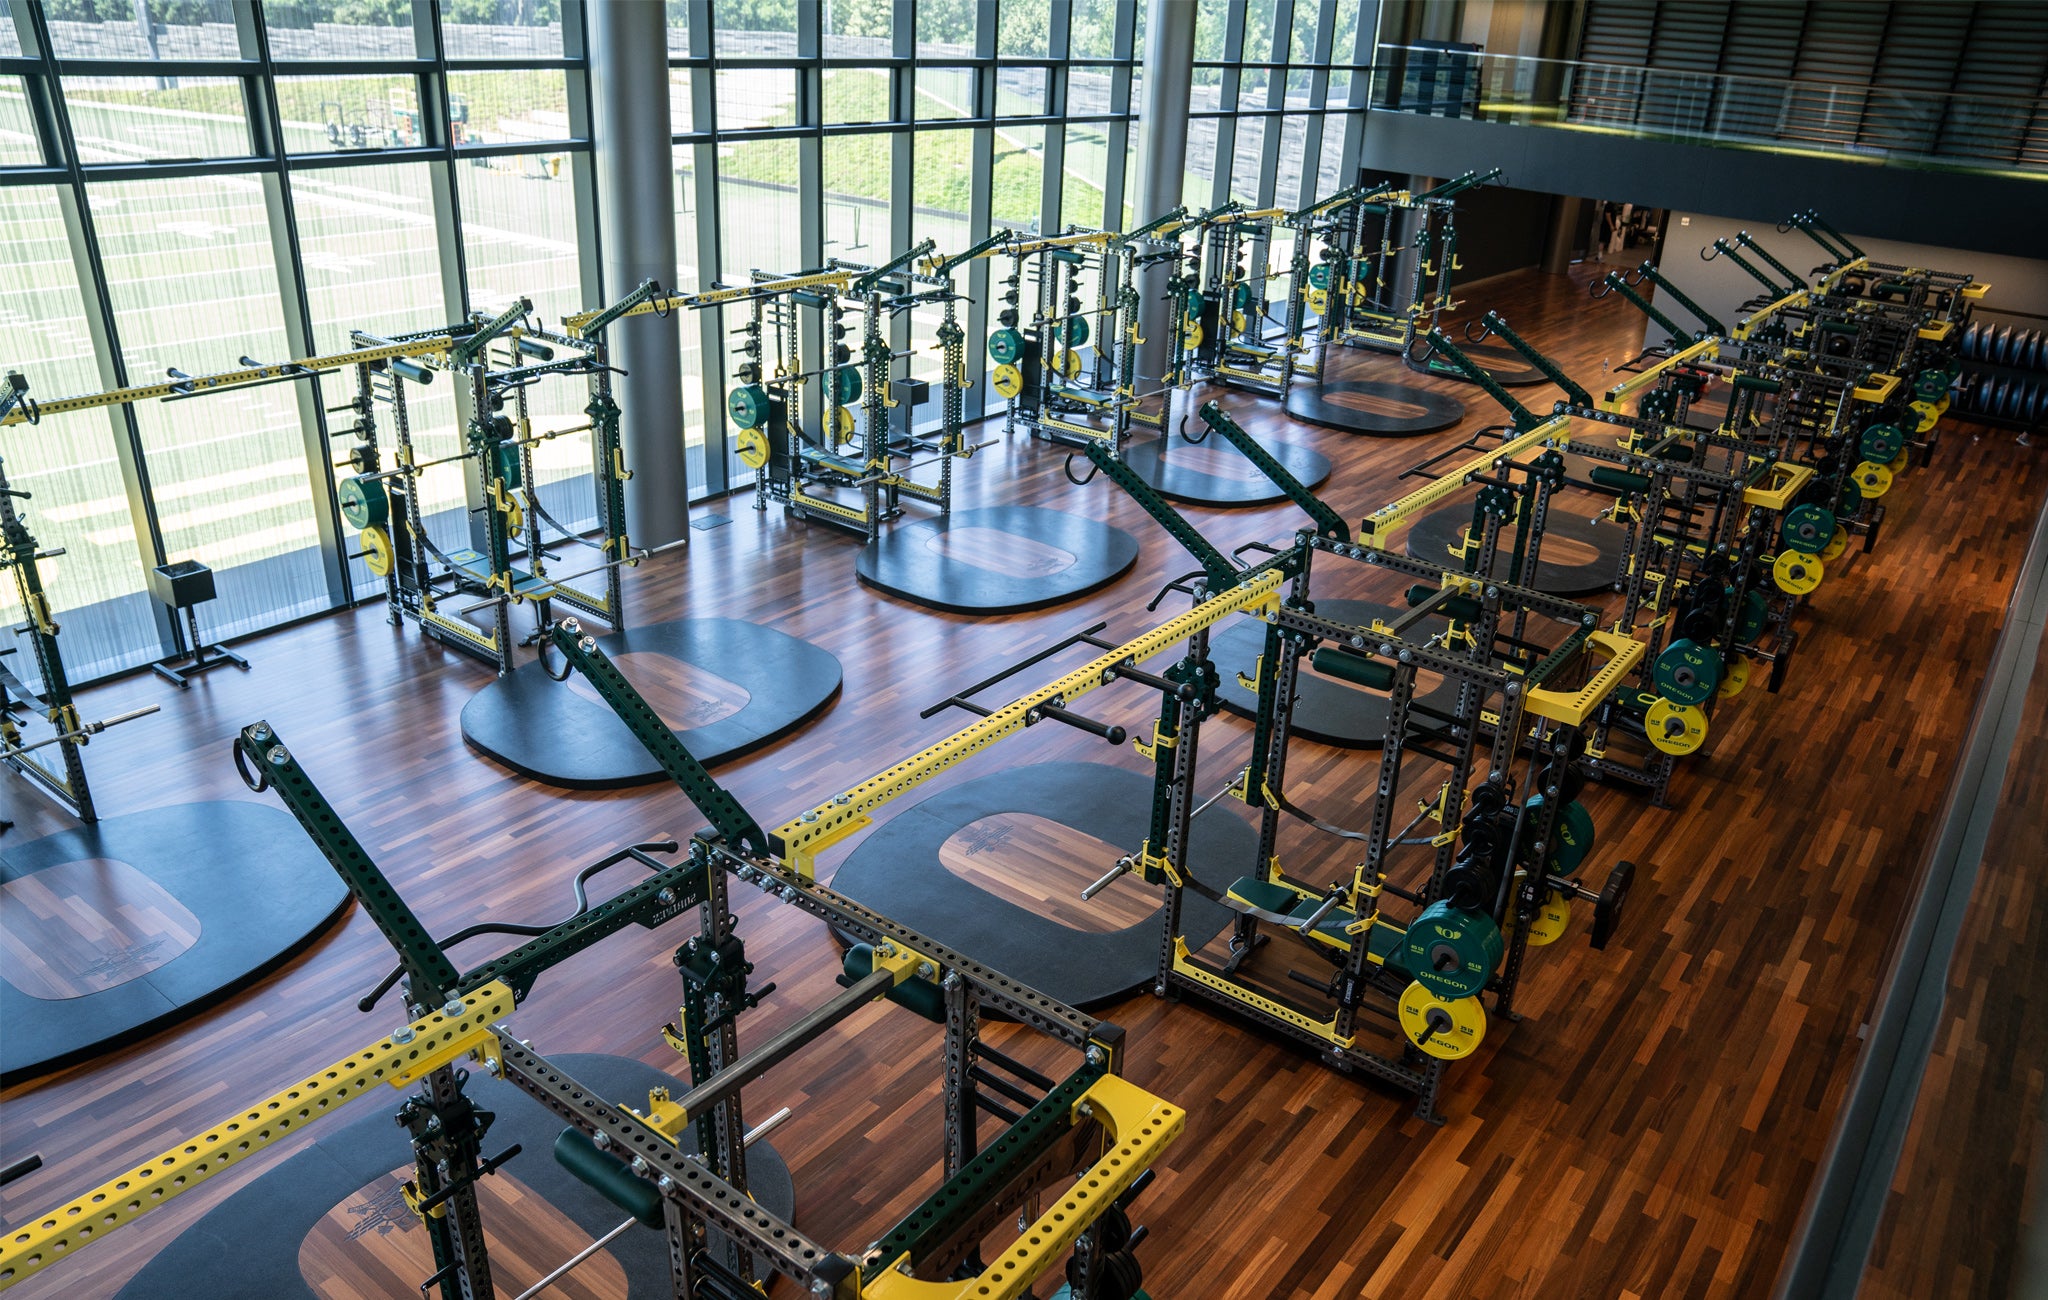 University of Oregon weight room